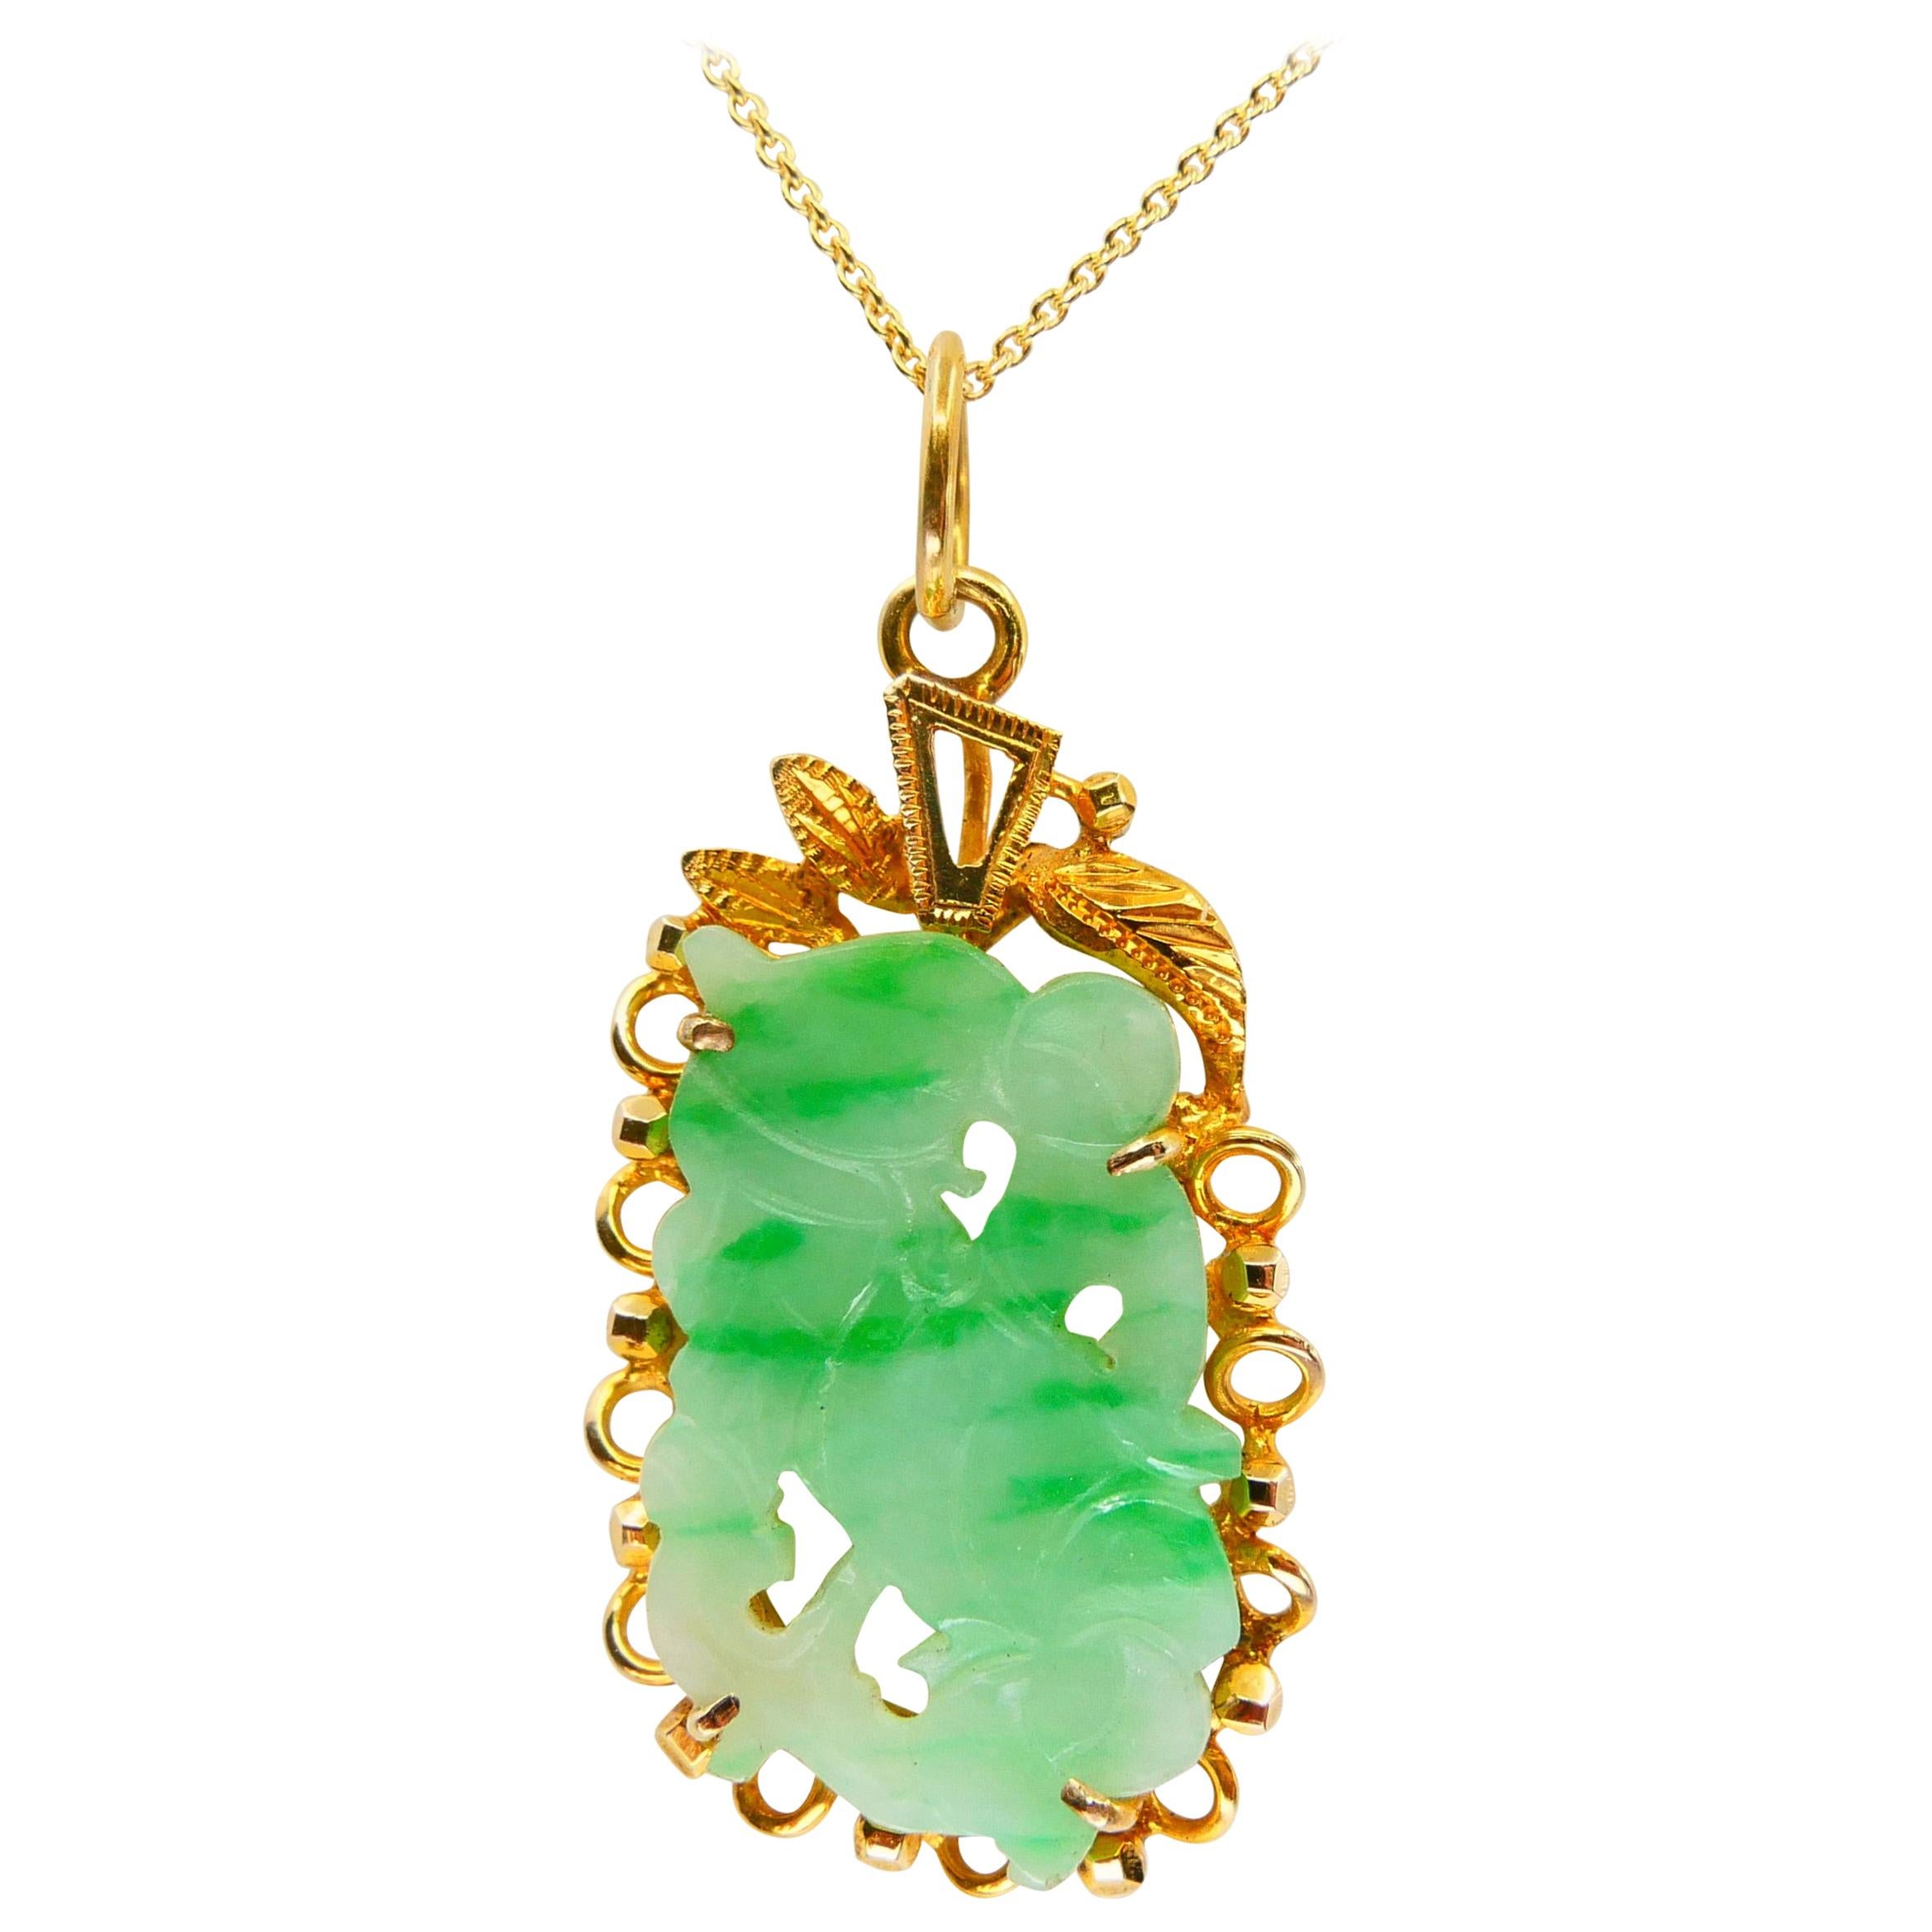 Certified Type A Jadeite Jade Pendant Drop Necklace, Apple Green Veins, N.O.S For Sale